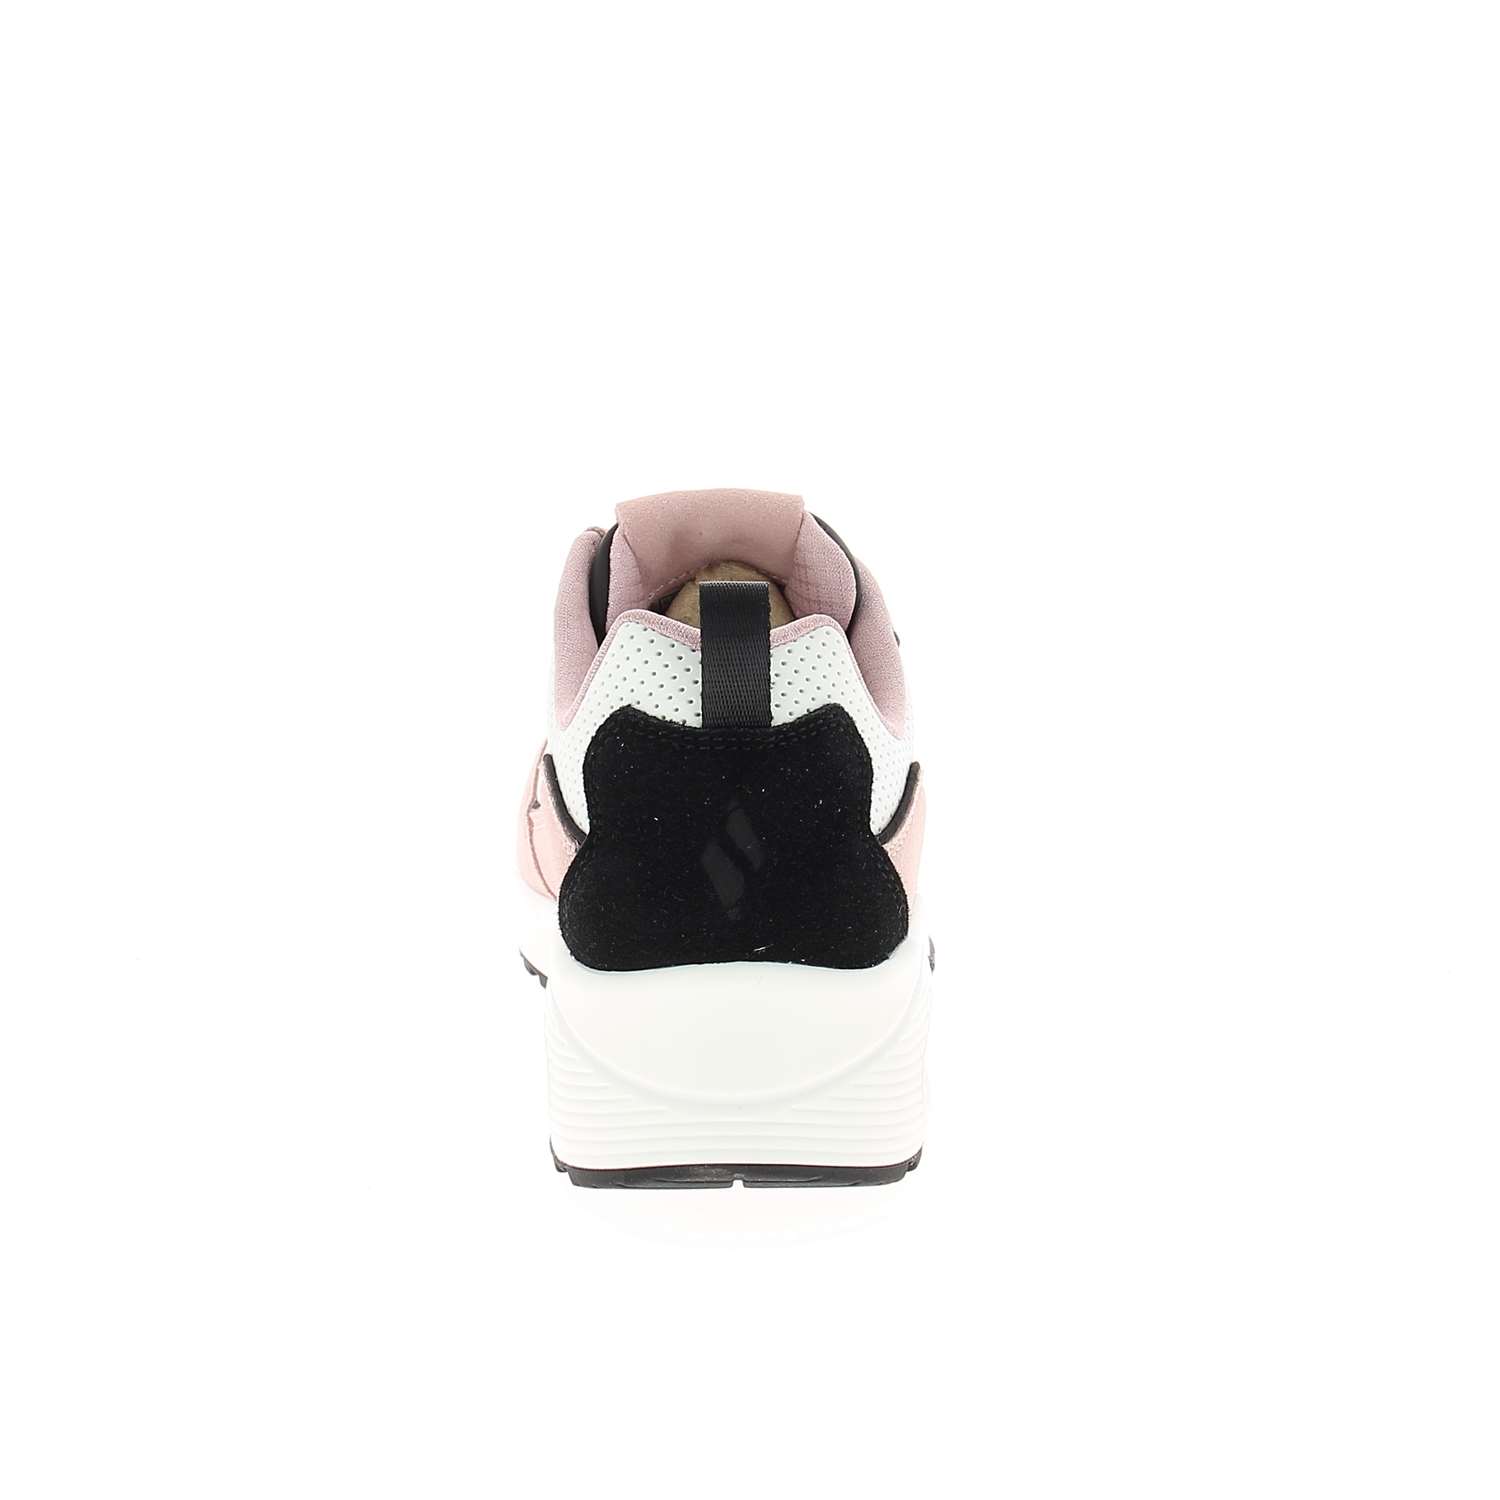 04 - UNO - SKECHERS - Chaussures à lacets - Synthétique